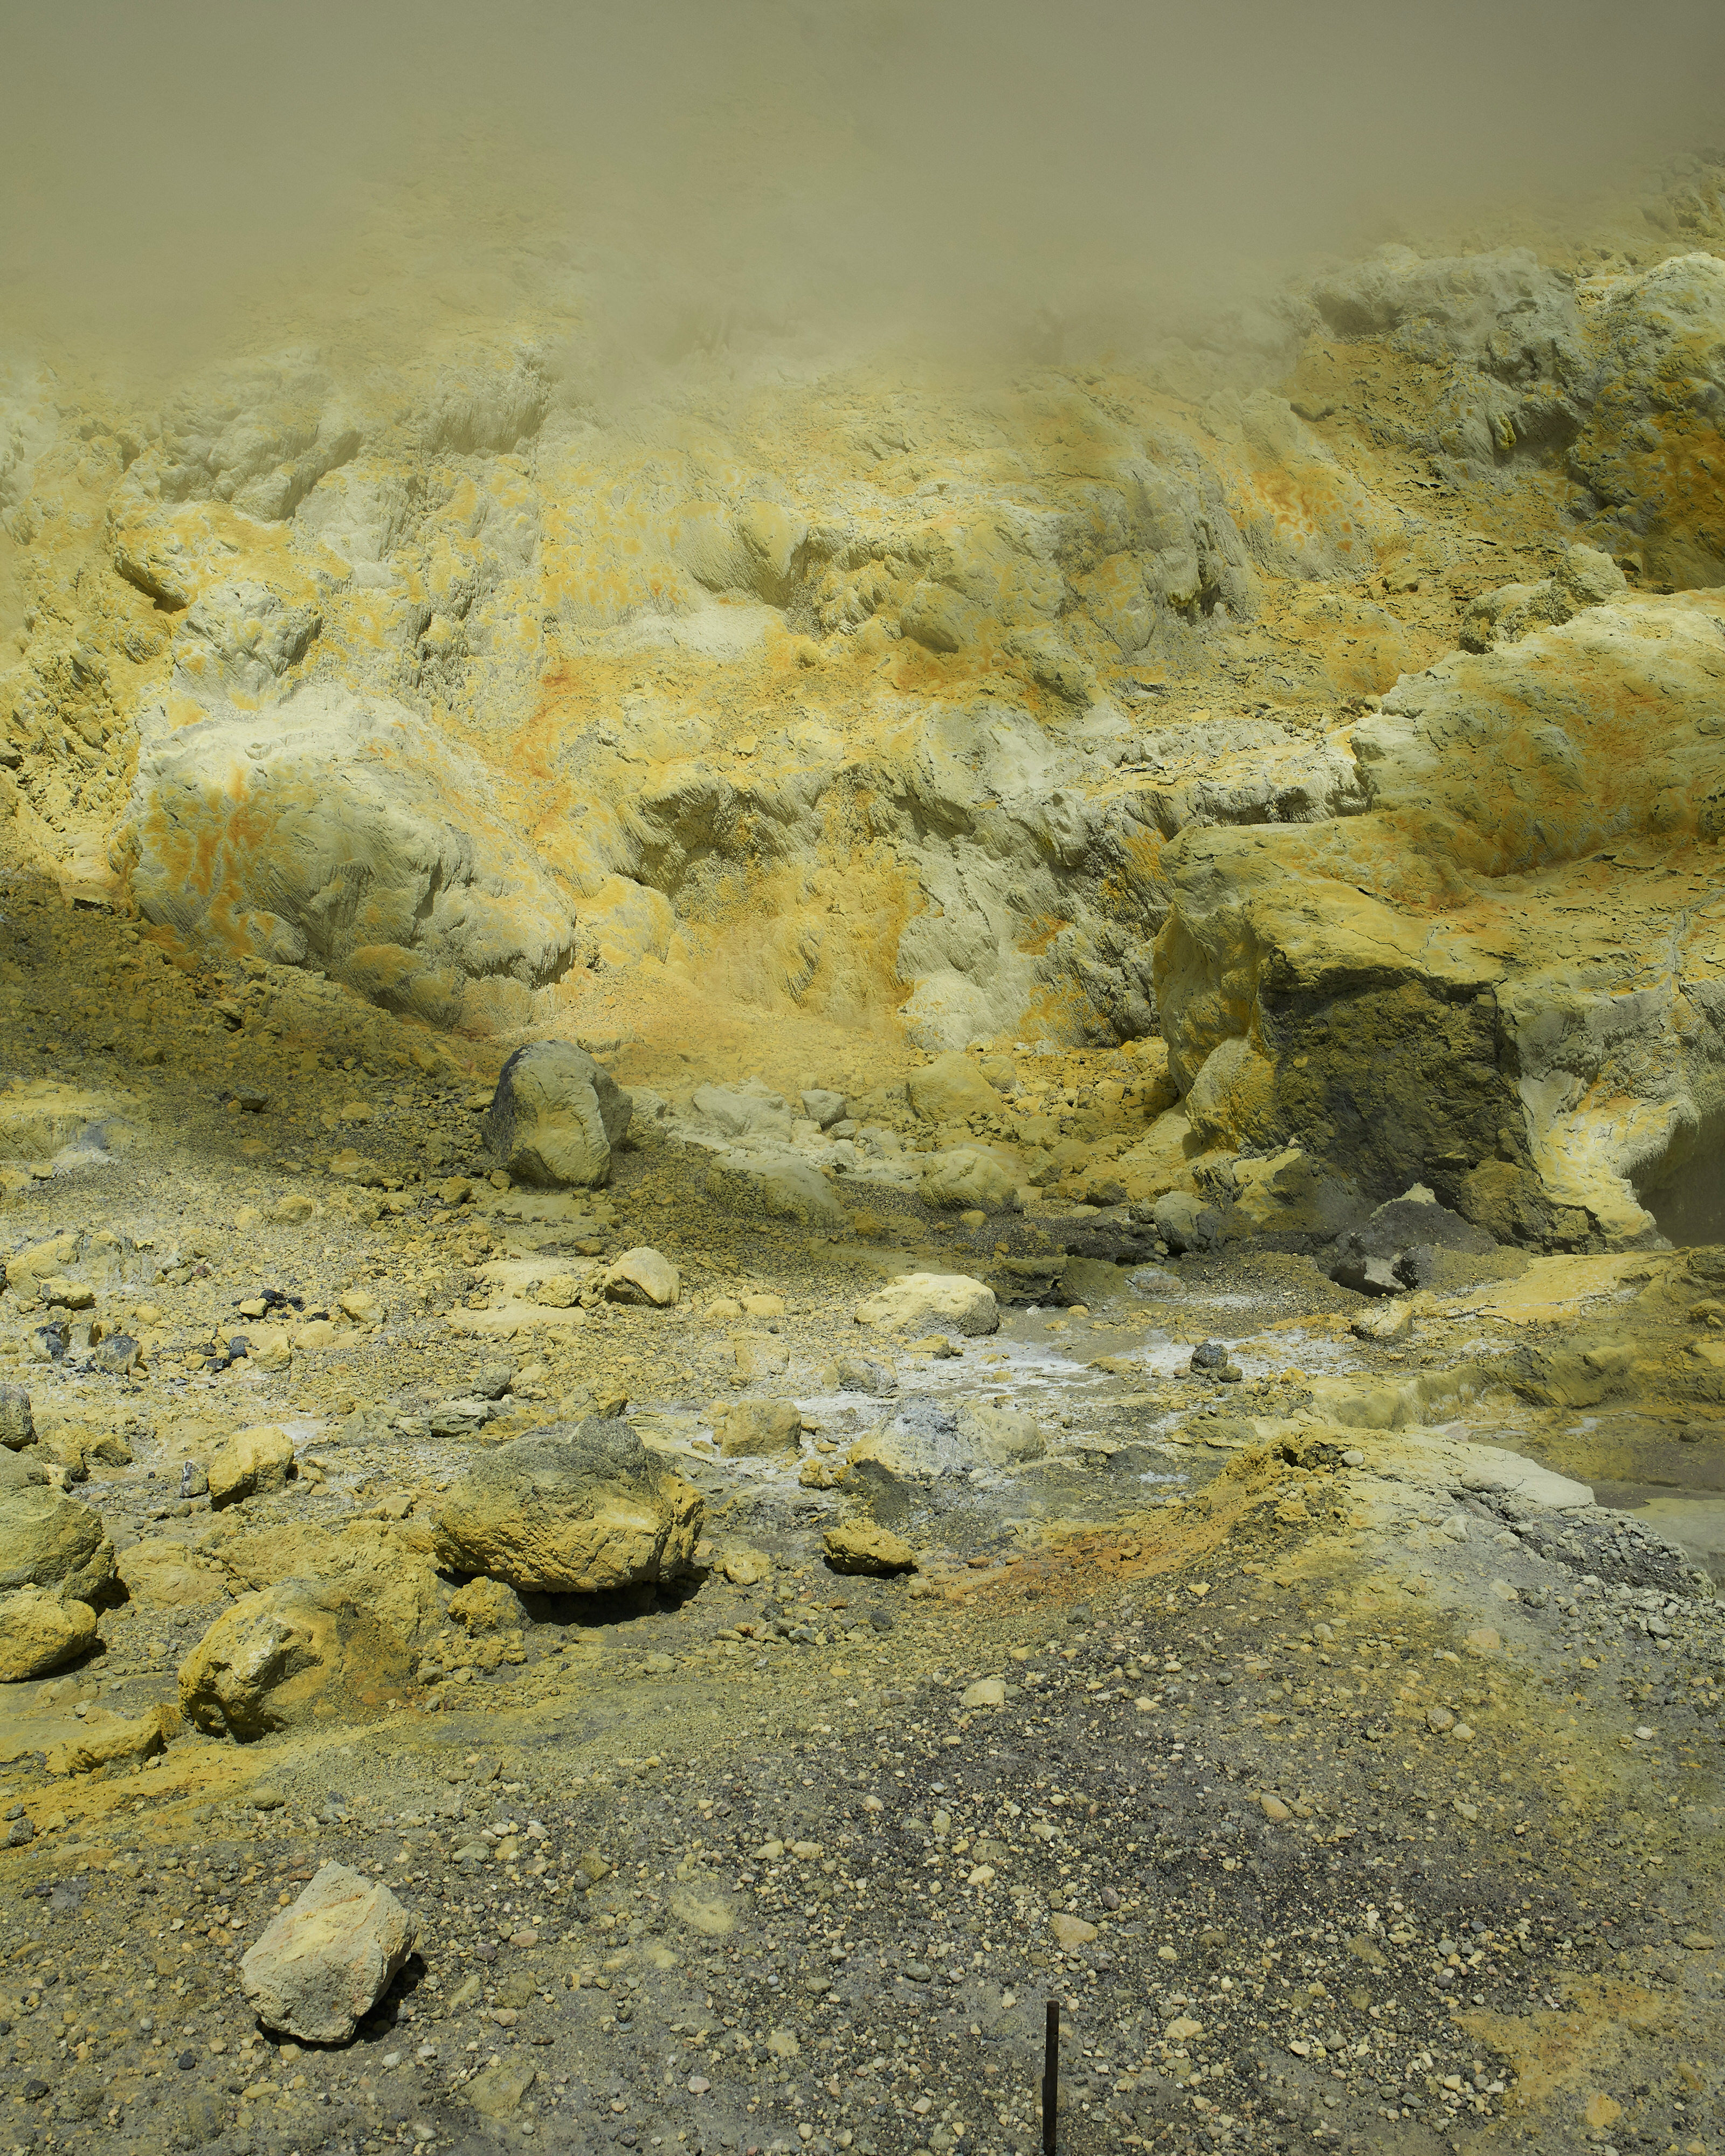 Sulphuric surface around encrusted fumeroles on Whakaari White Island